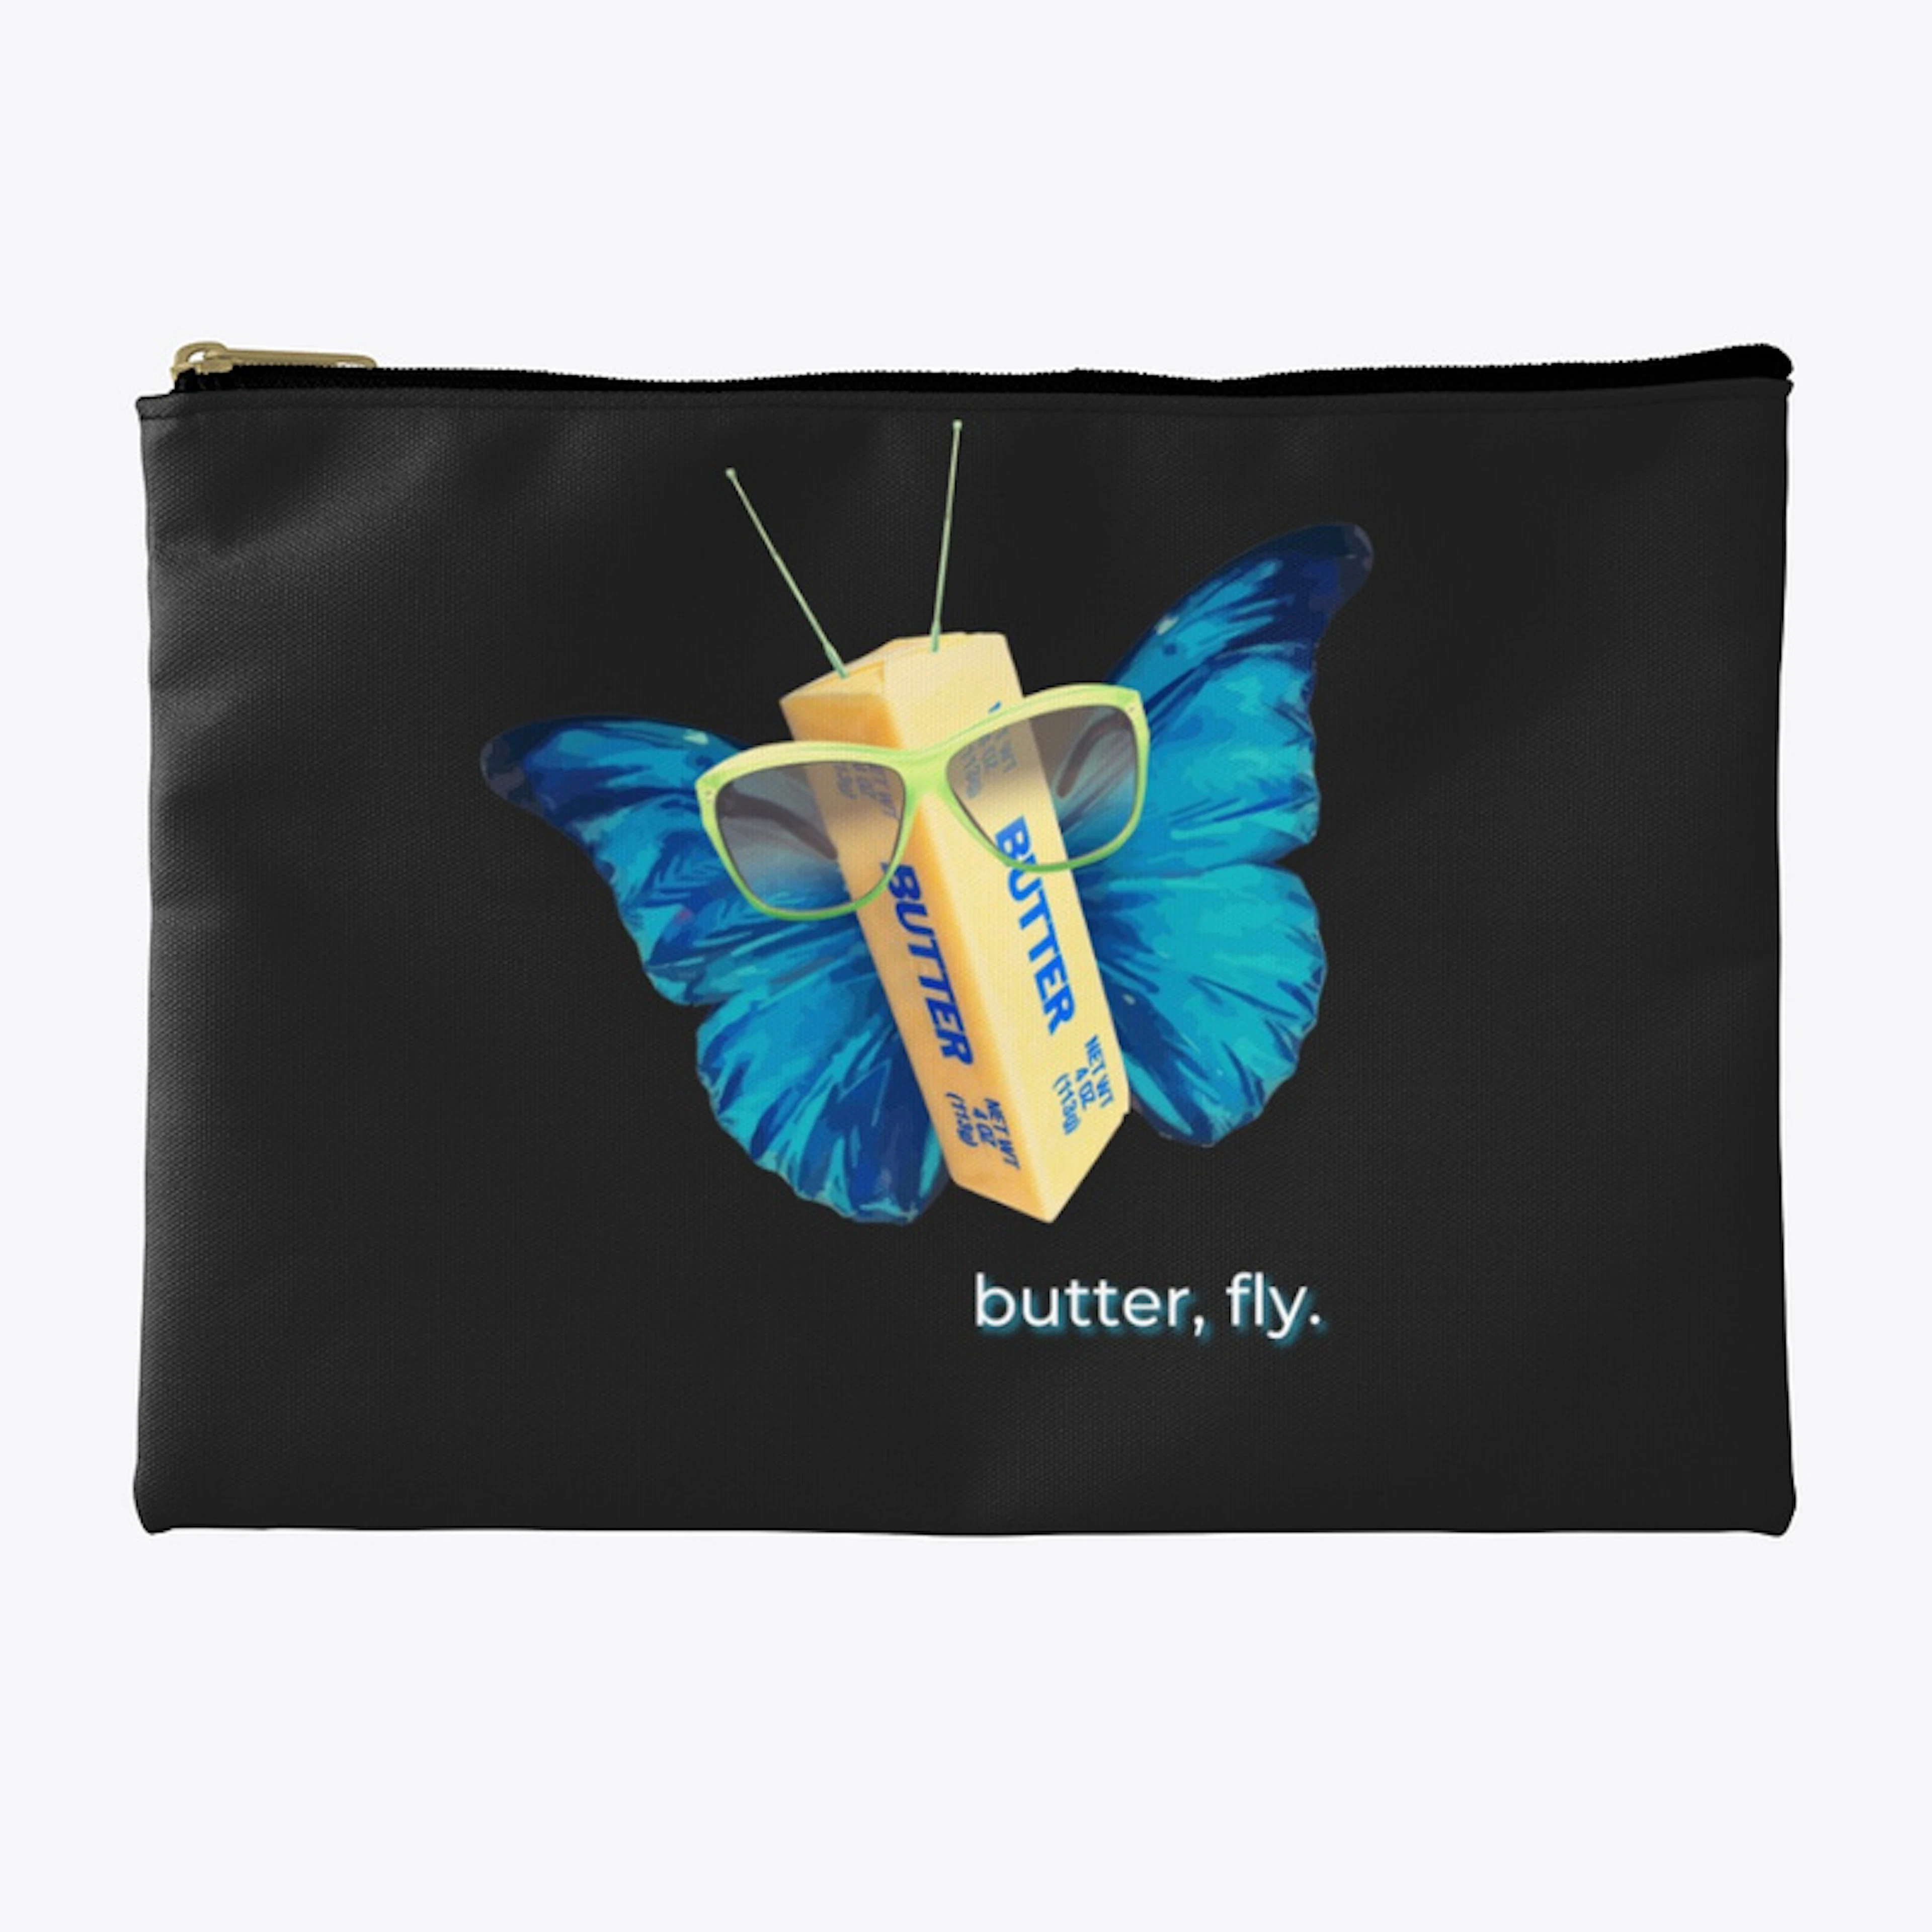 Butter, fly